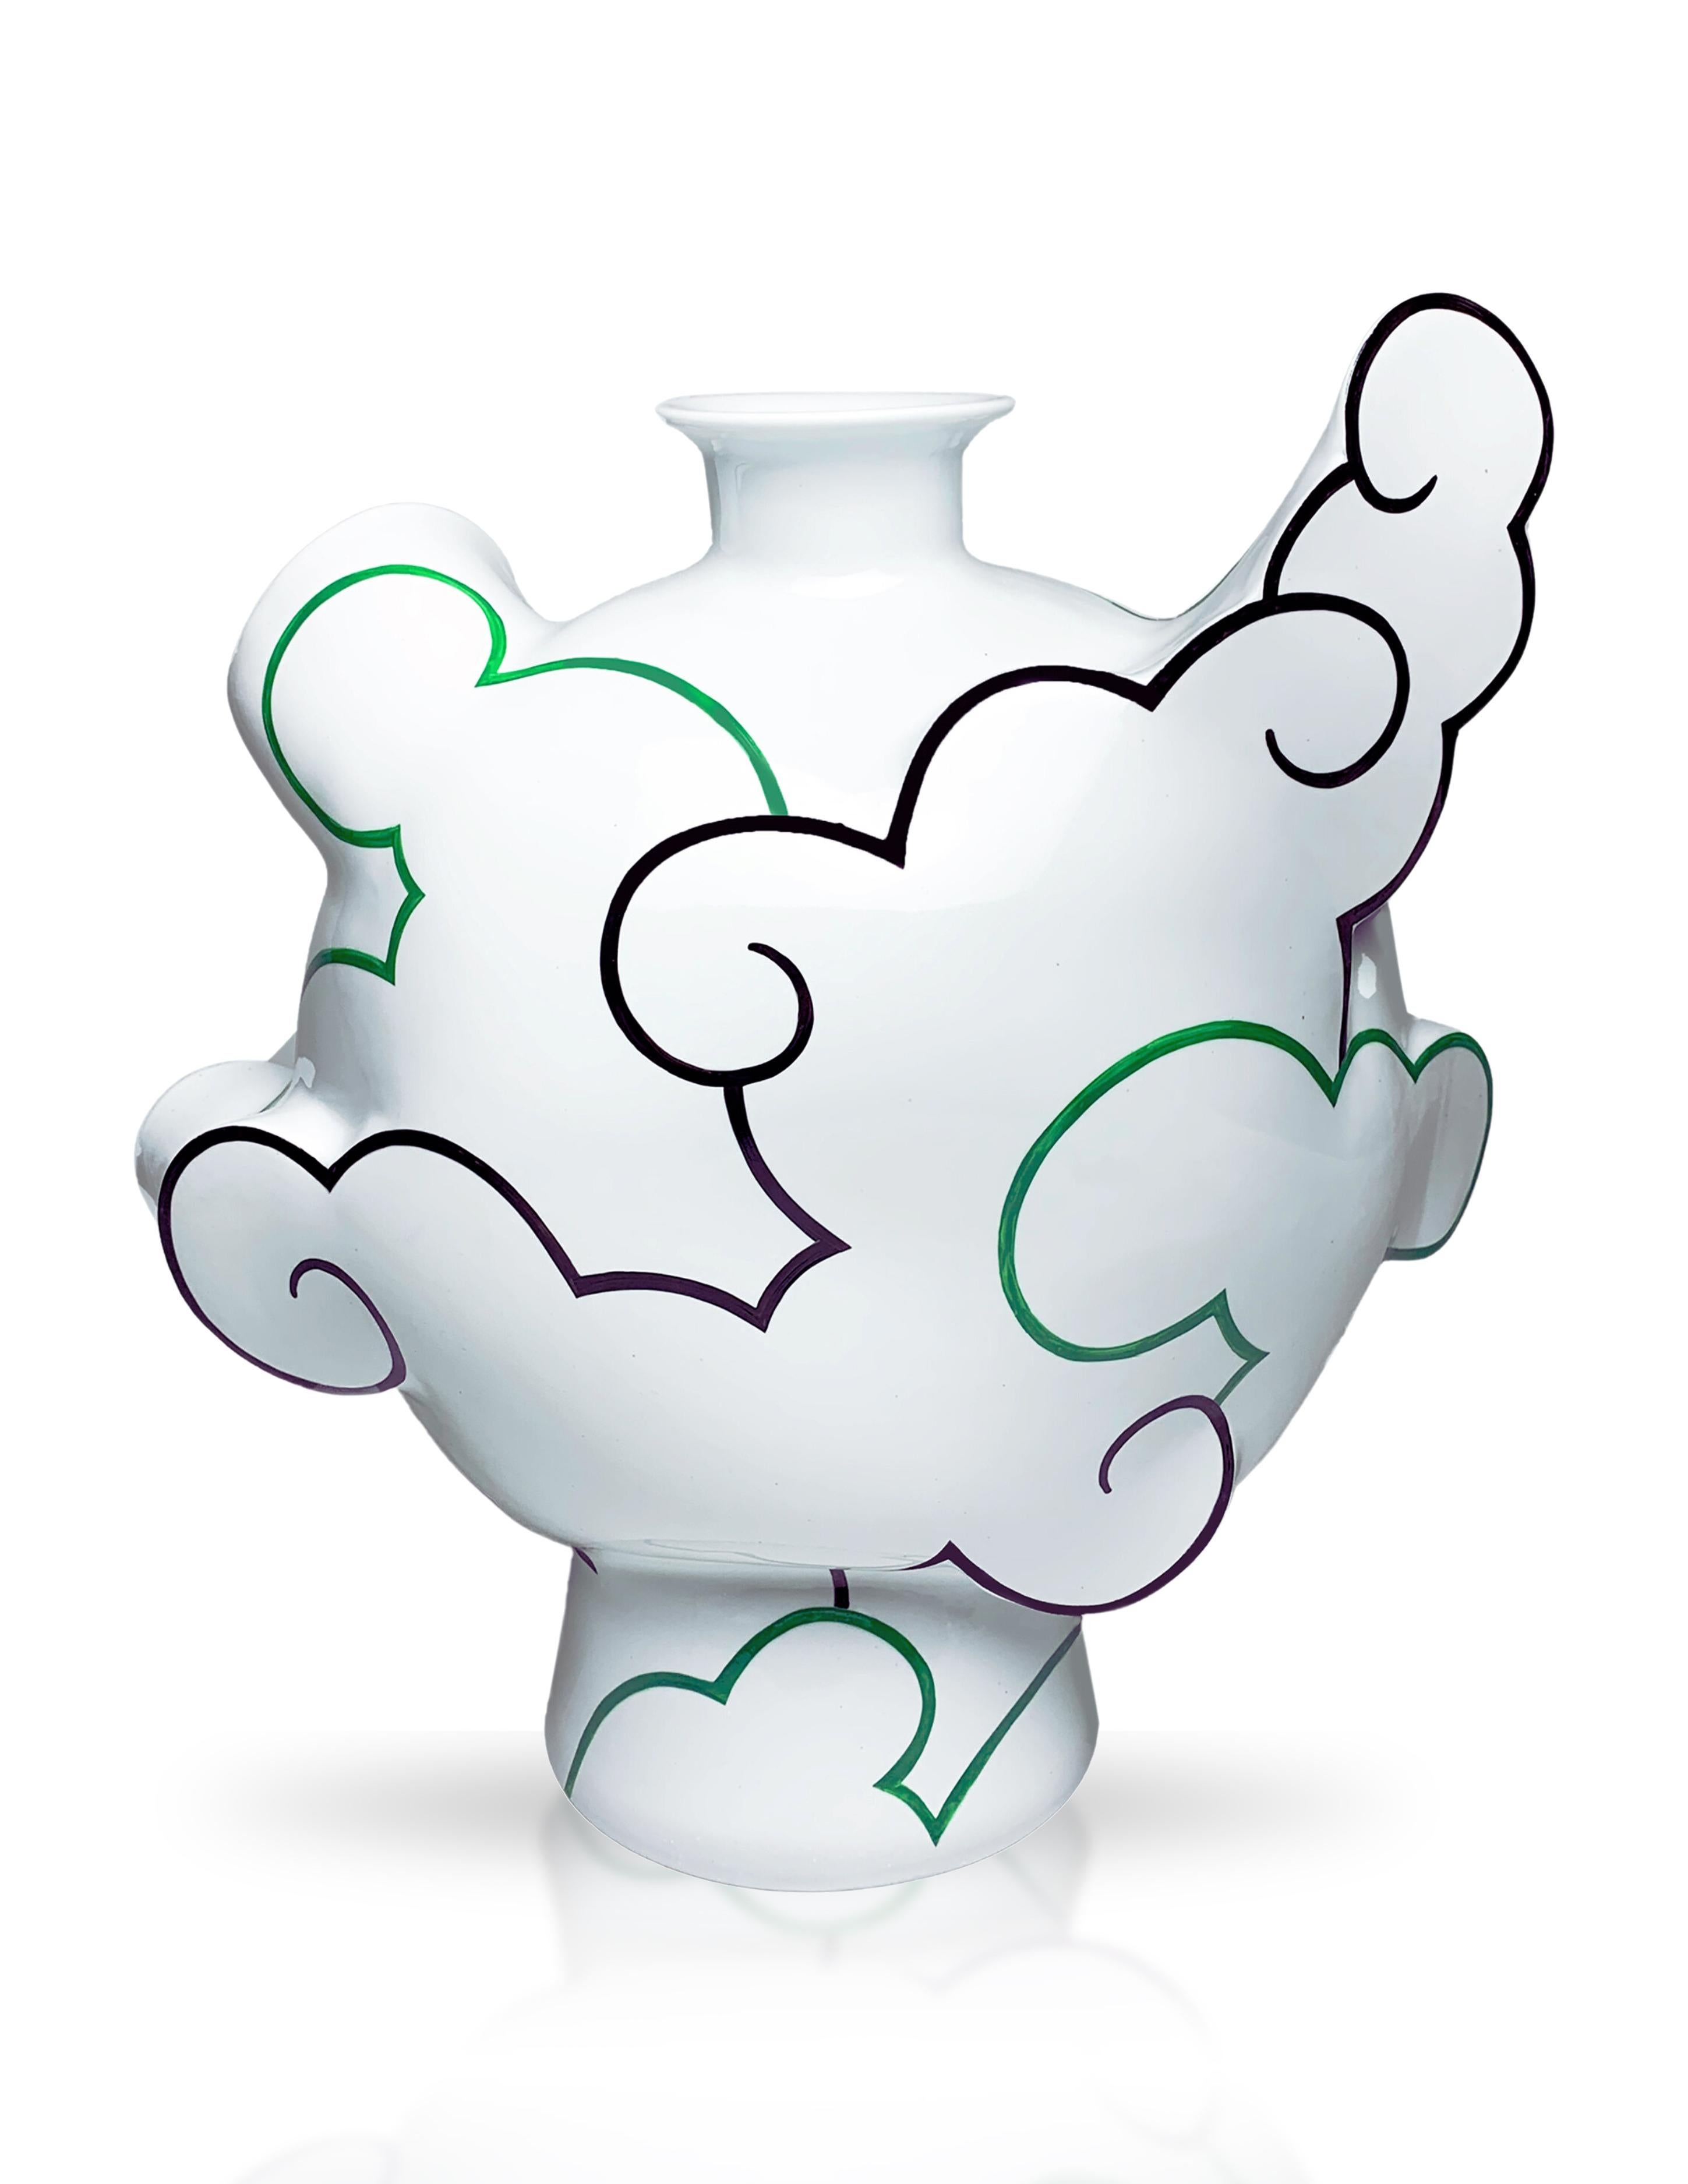 Sam Chung Abstract Sculpture - "Cloud Flask", Ceramic, Vessel, Porcelain, Overglaze Paint, Clouds, Biomorphic